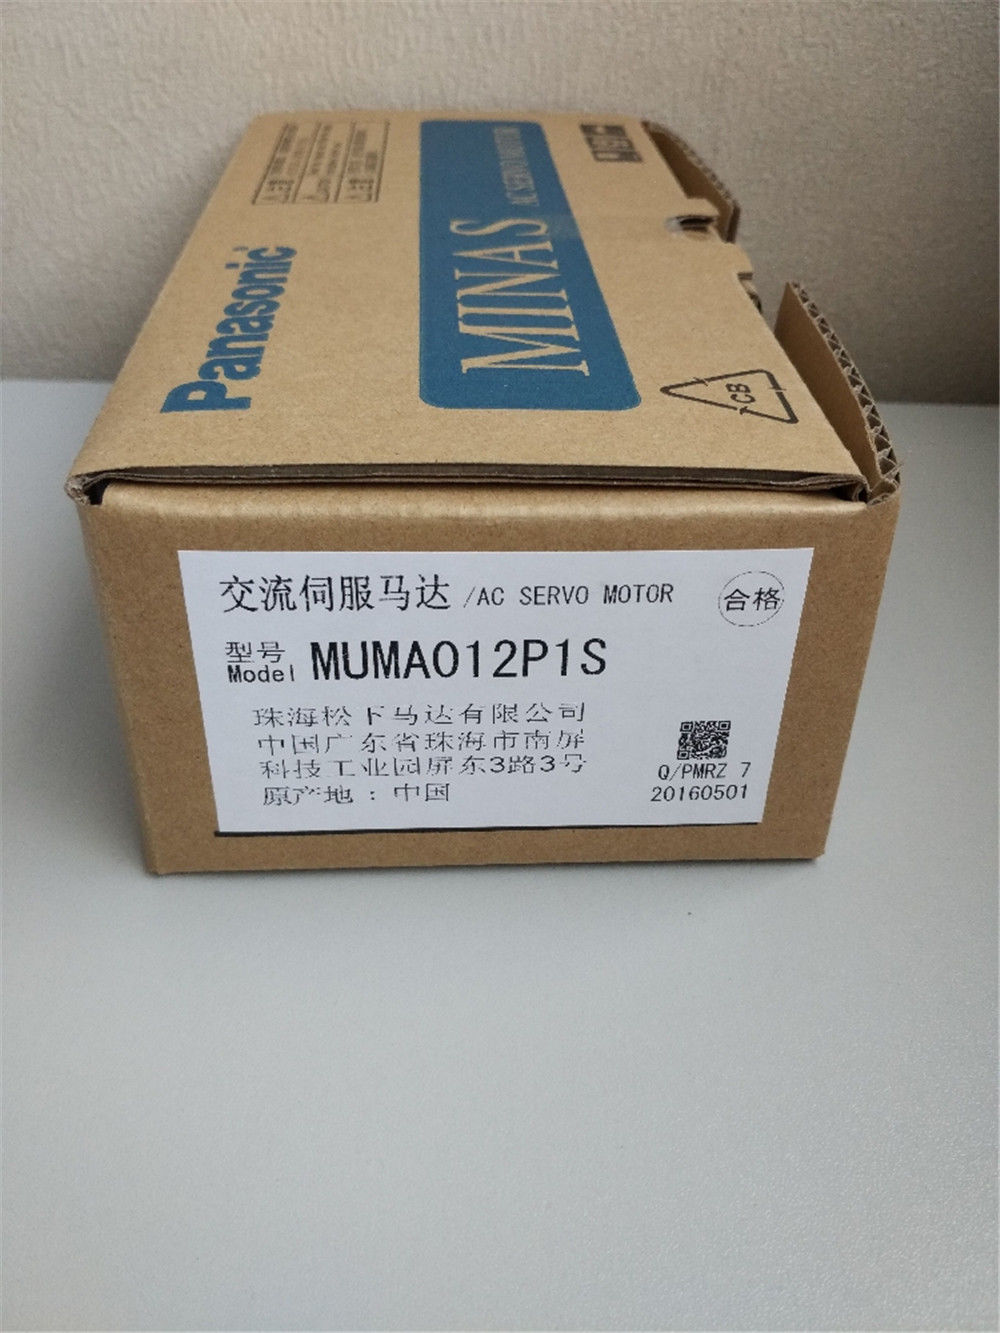 Brand New PANASONIC AC Servo motor MUMA012P1S in box - Click Image to Close